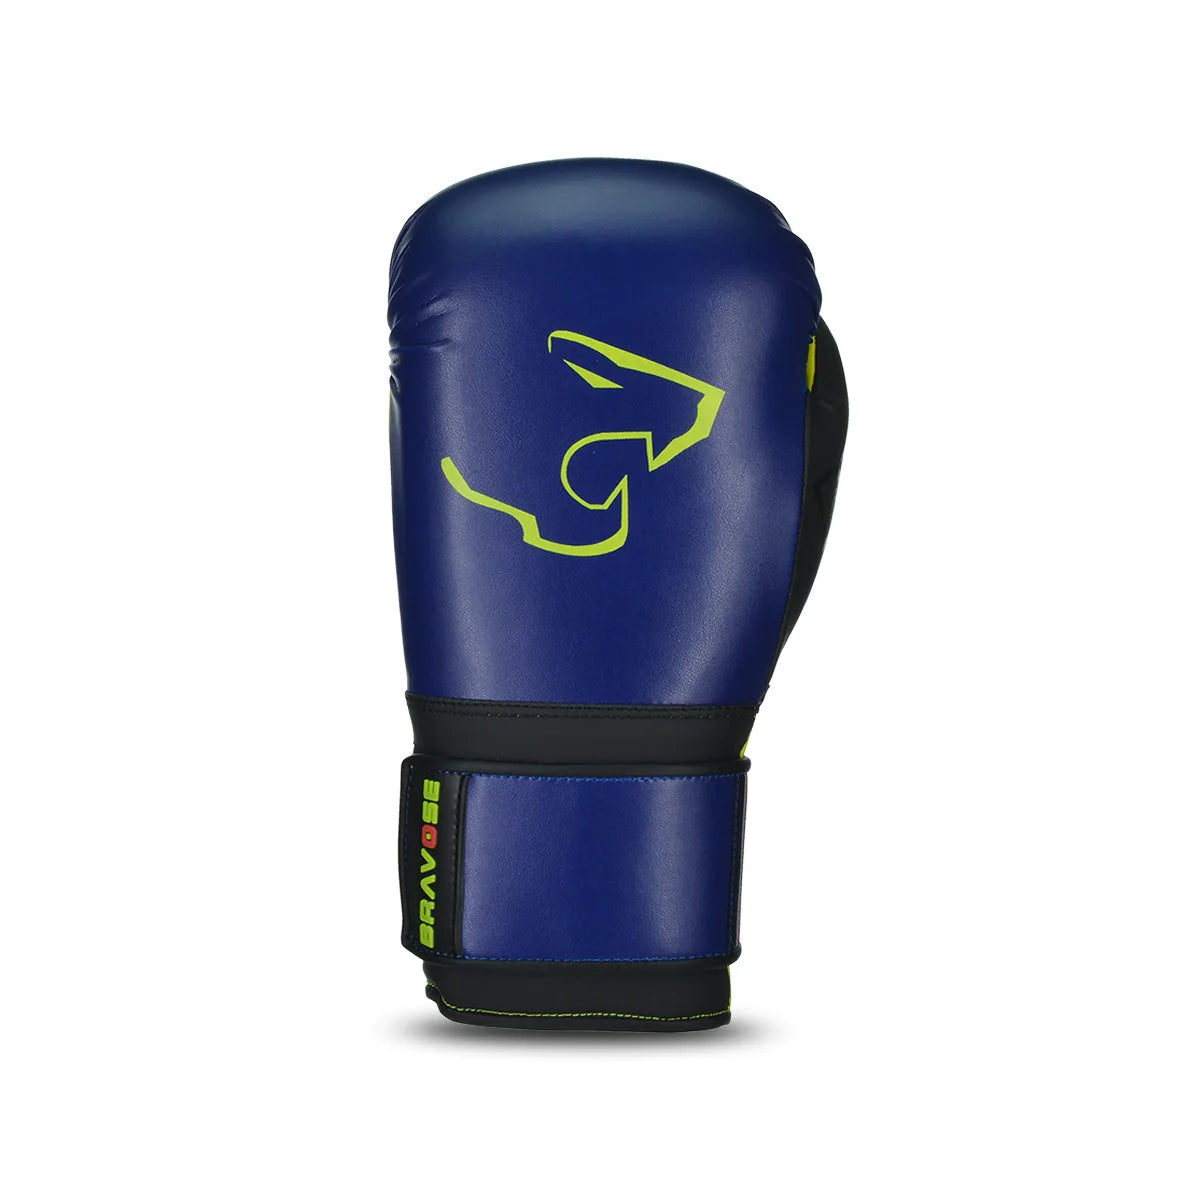 Bravose Nemesis Blue & Yellow Boxing Gloves